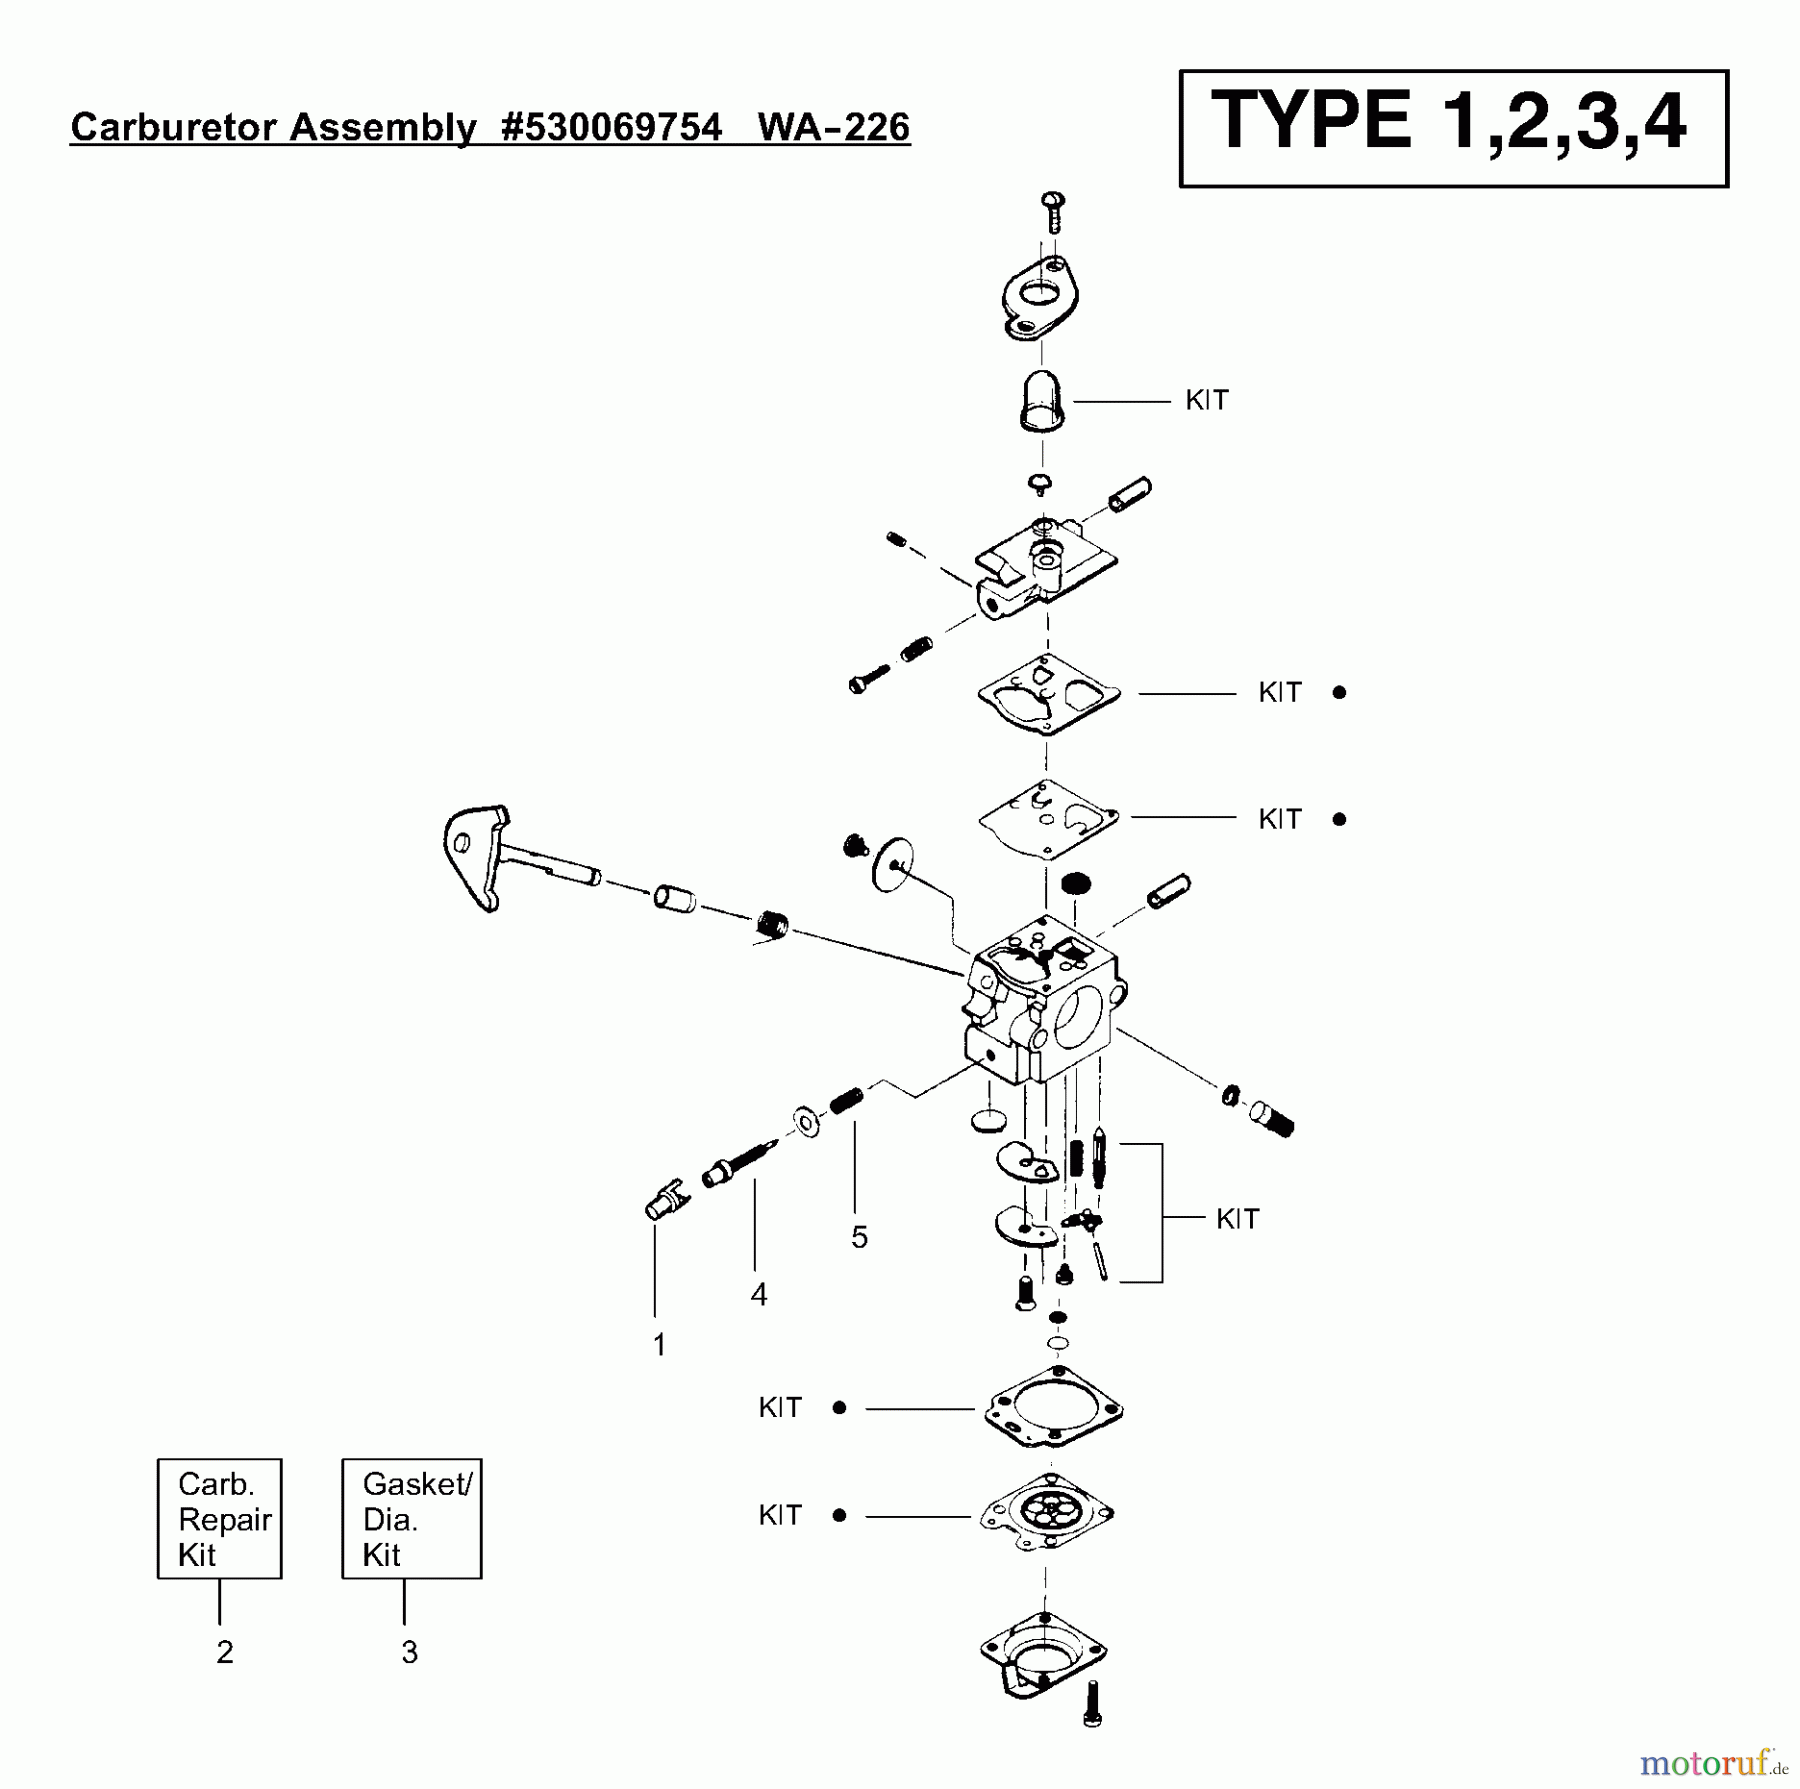  Poulan / Weed Eater Motorsensen, Trimmer SST25 (Type 3) - Weed Eater Featherlite HO String Trimmer Carburetor Assembly (WA226) P/N 530069754